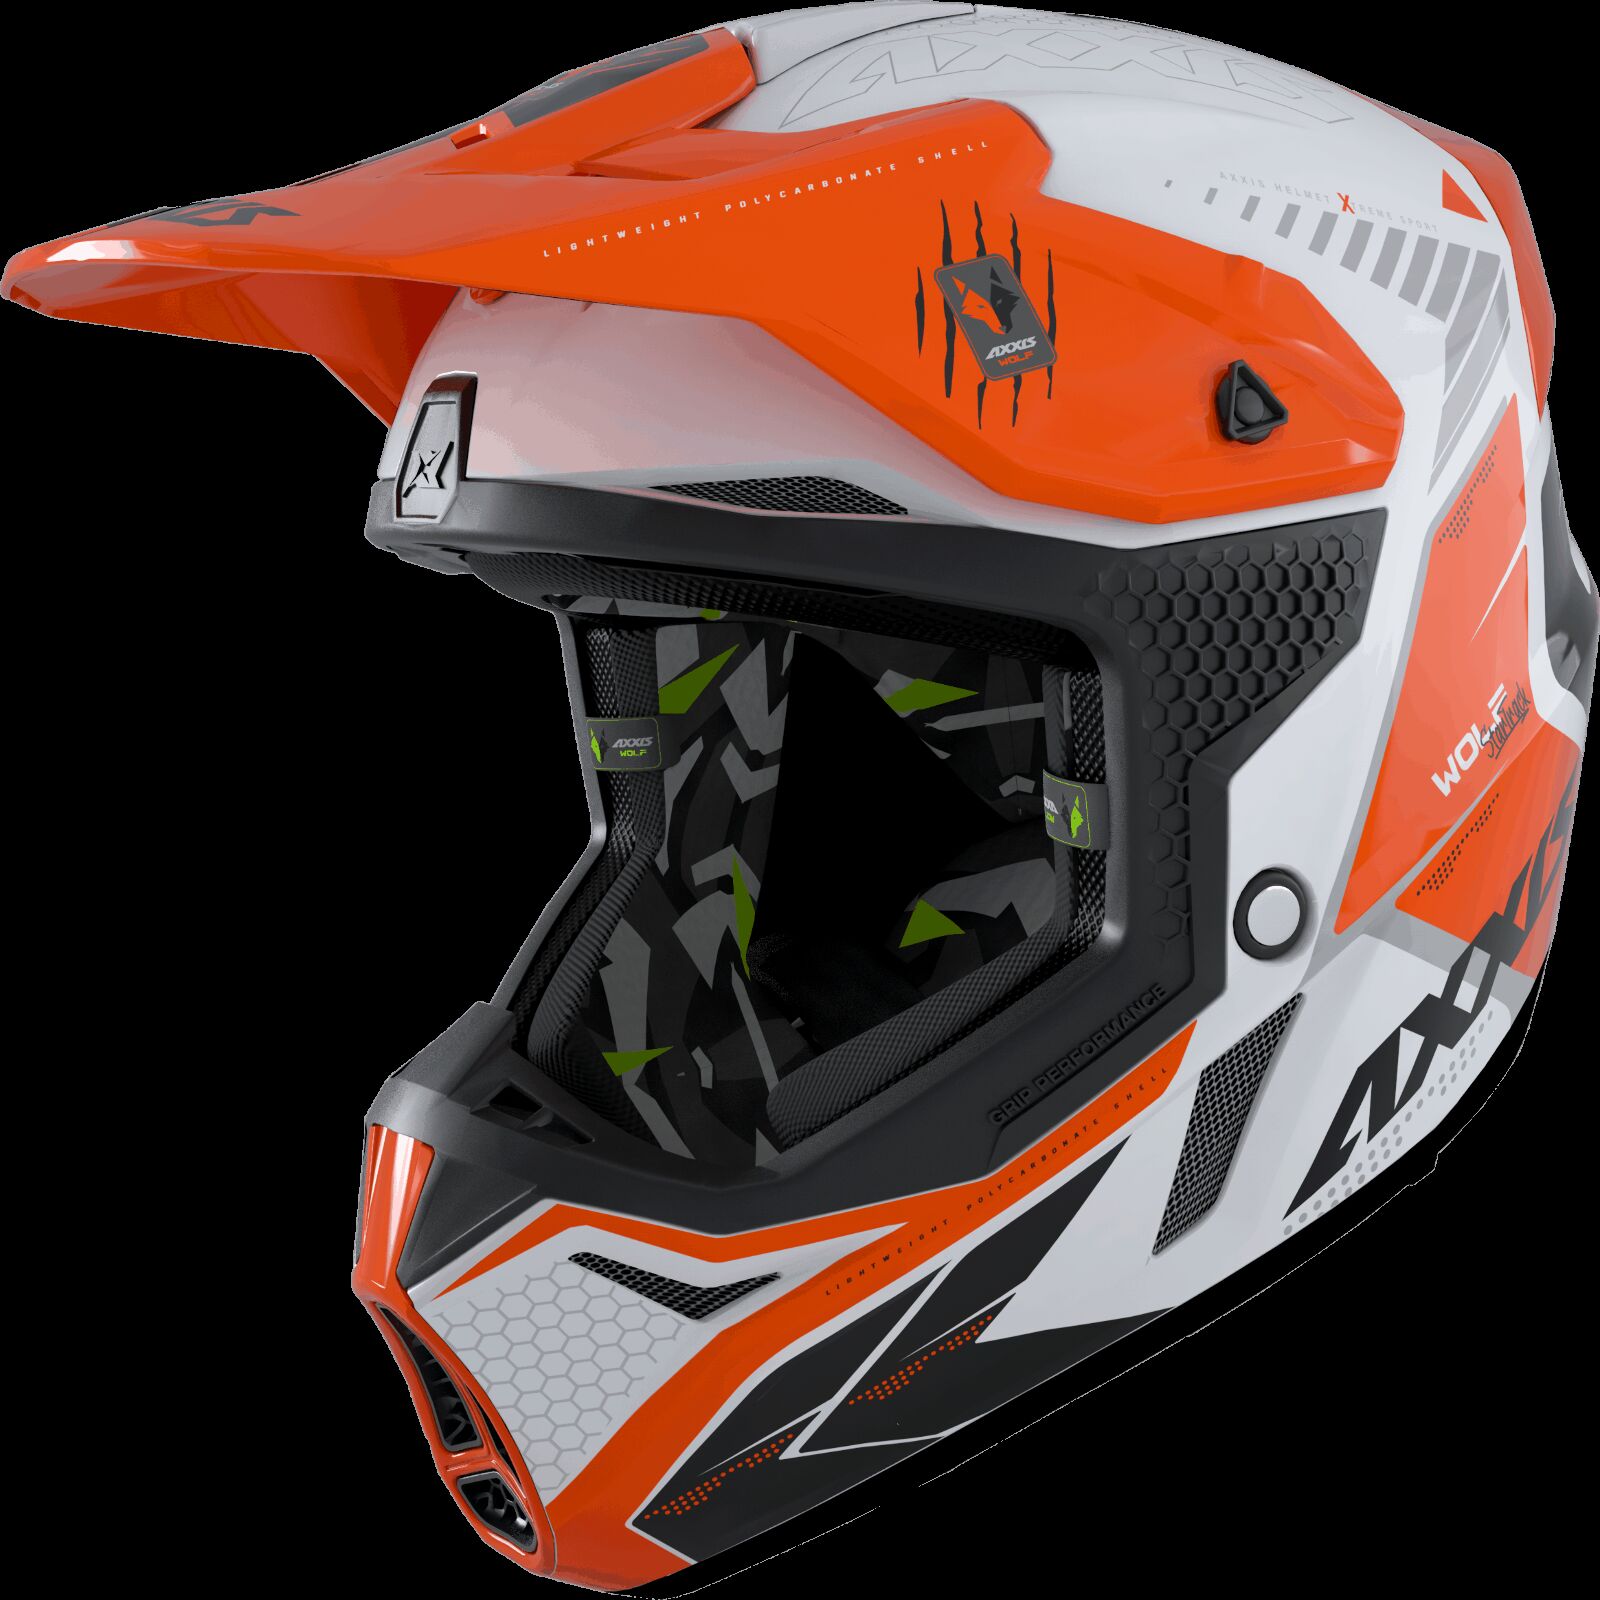 Obrázek produktu Motokrosová helma AXXIS WOLF ABS star track a4 lesklá fluor oranžová L 42587410406